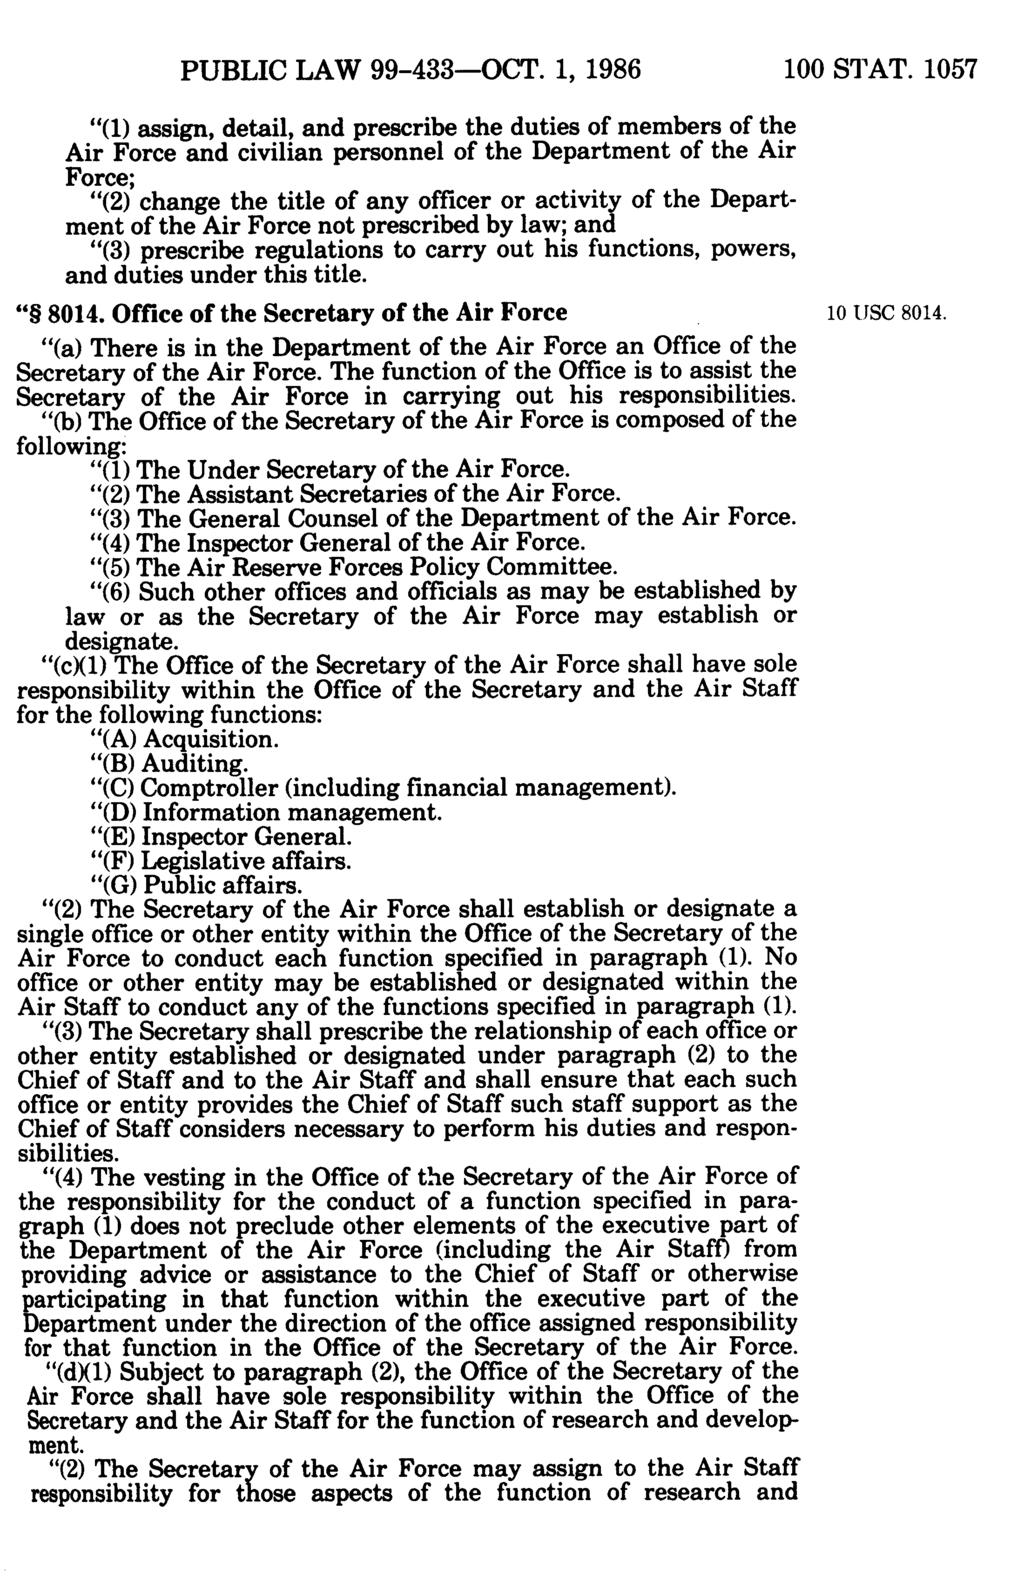 PUBLIC LAW 99-433-OCT. 1, 1986 100 STAT.